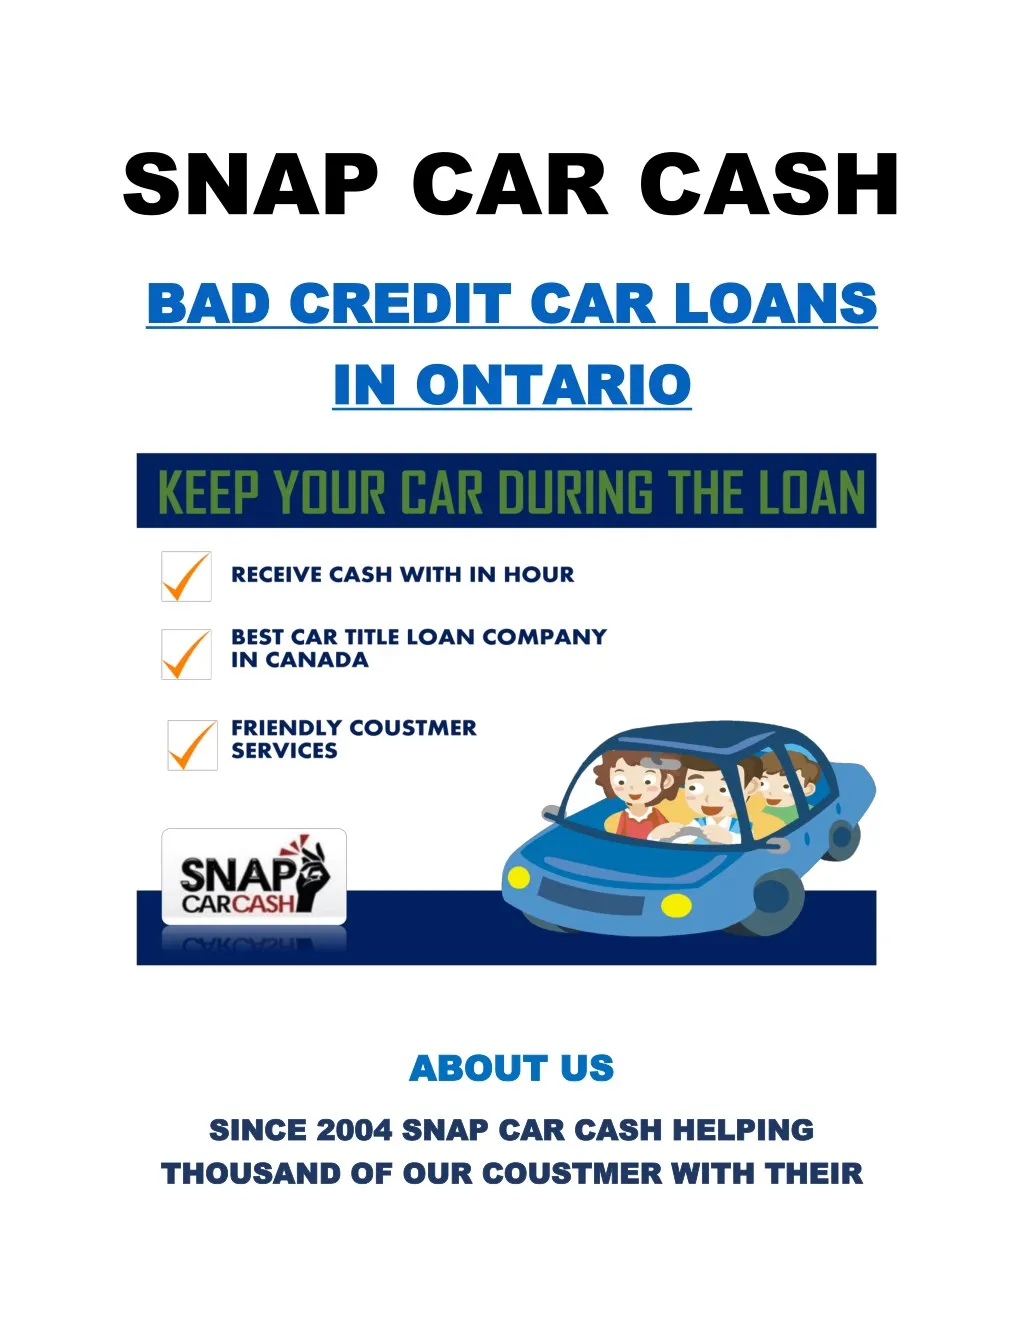 snap car cash bad credit car loans bad credit